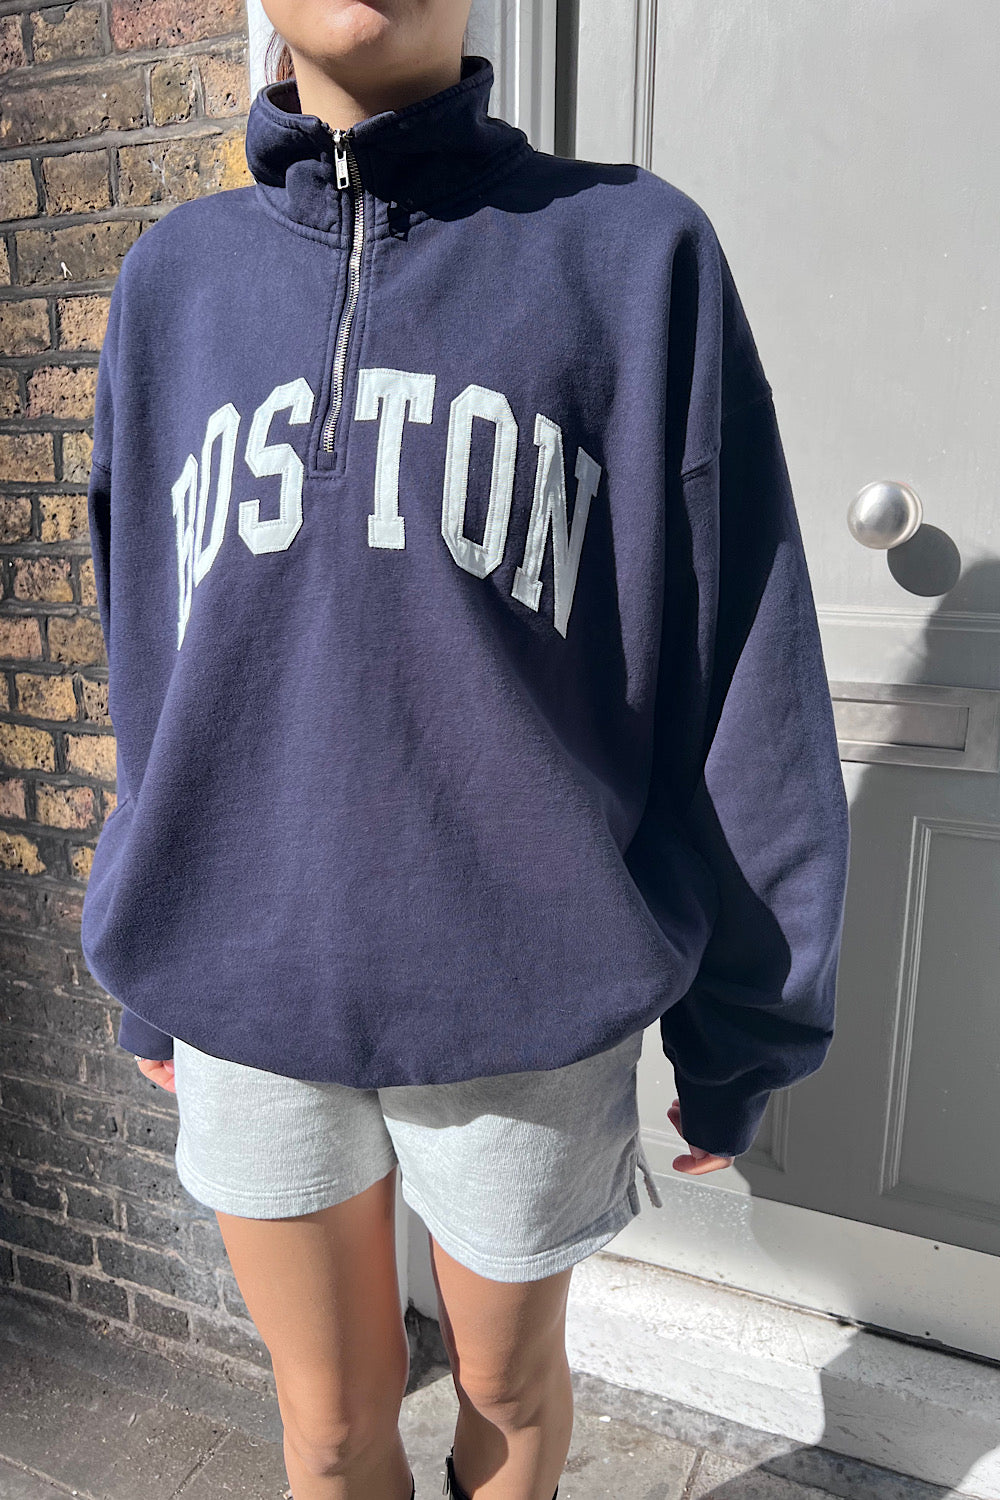 Missy Boston Sweatshirt